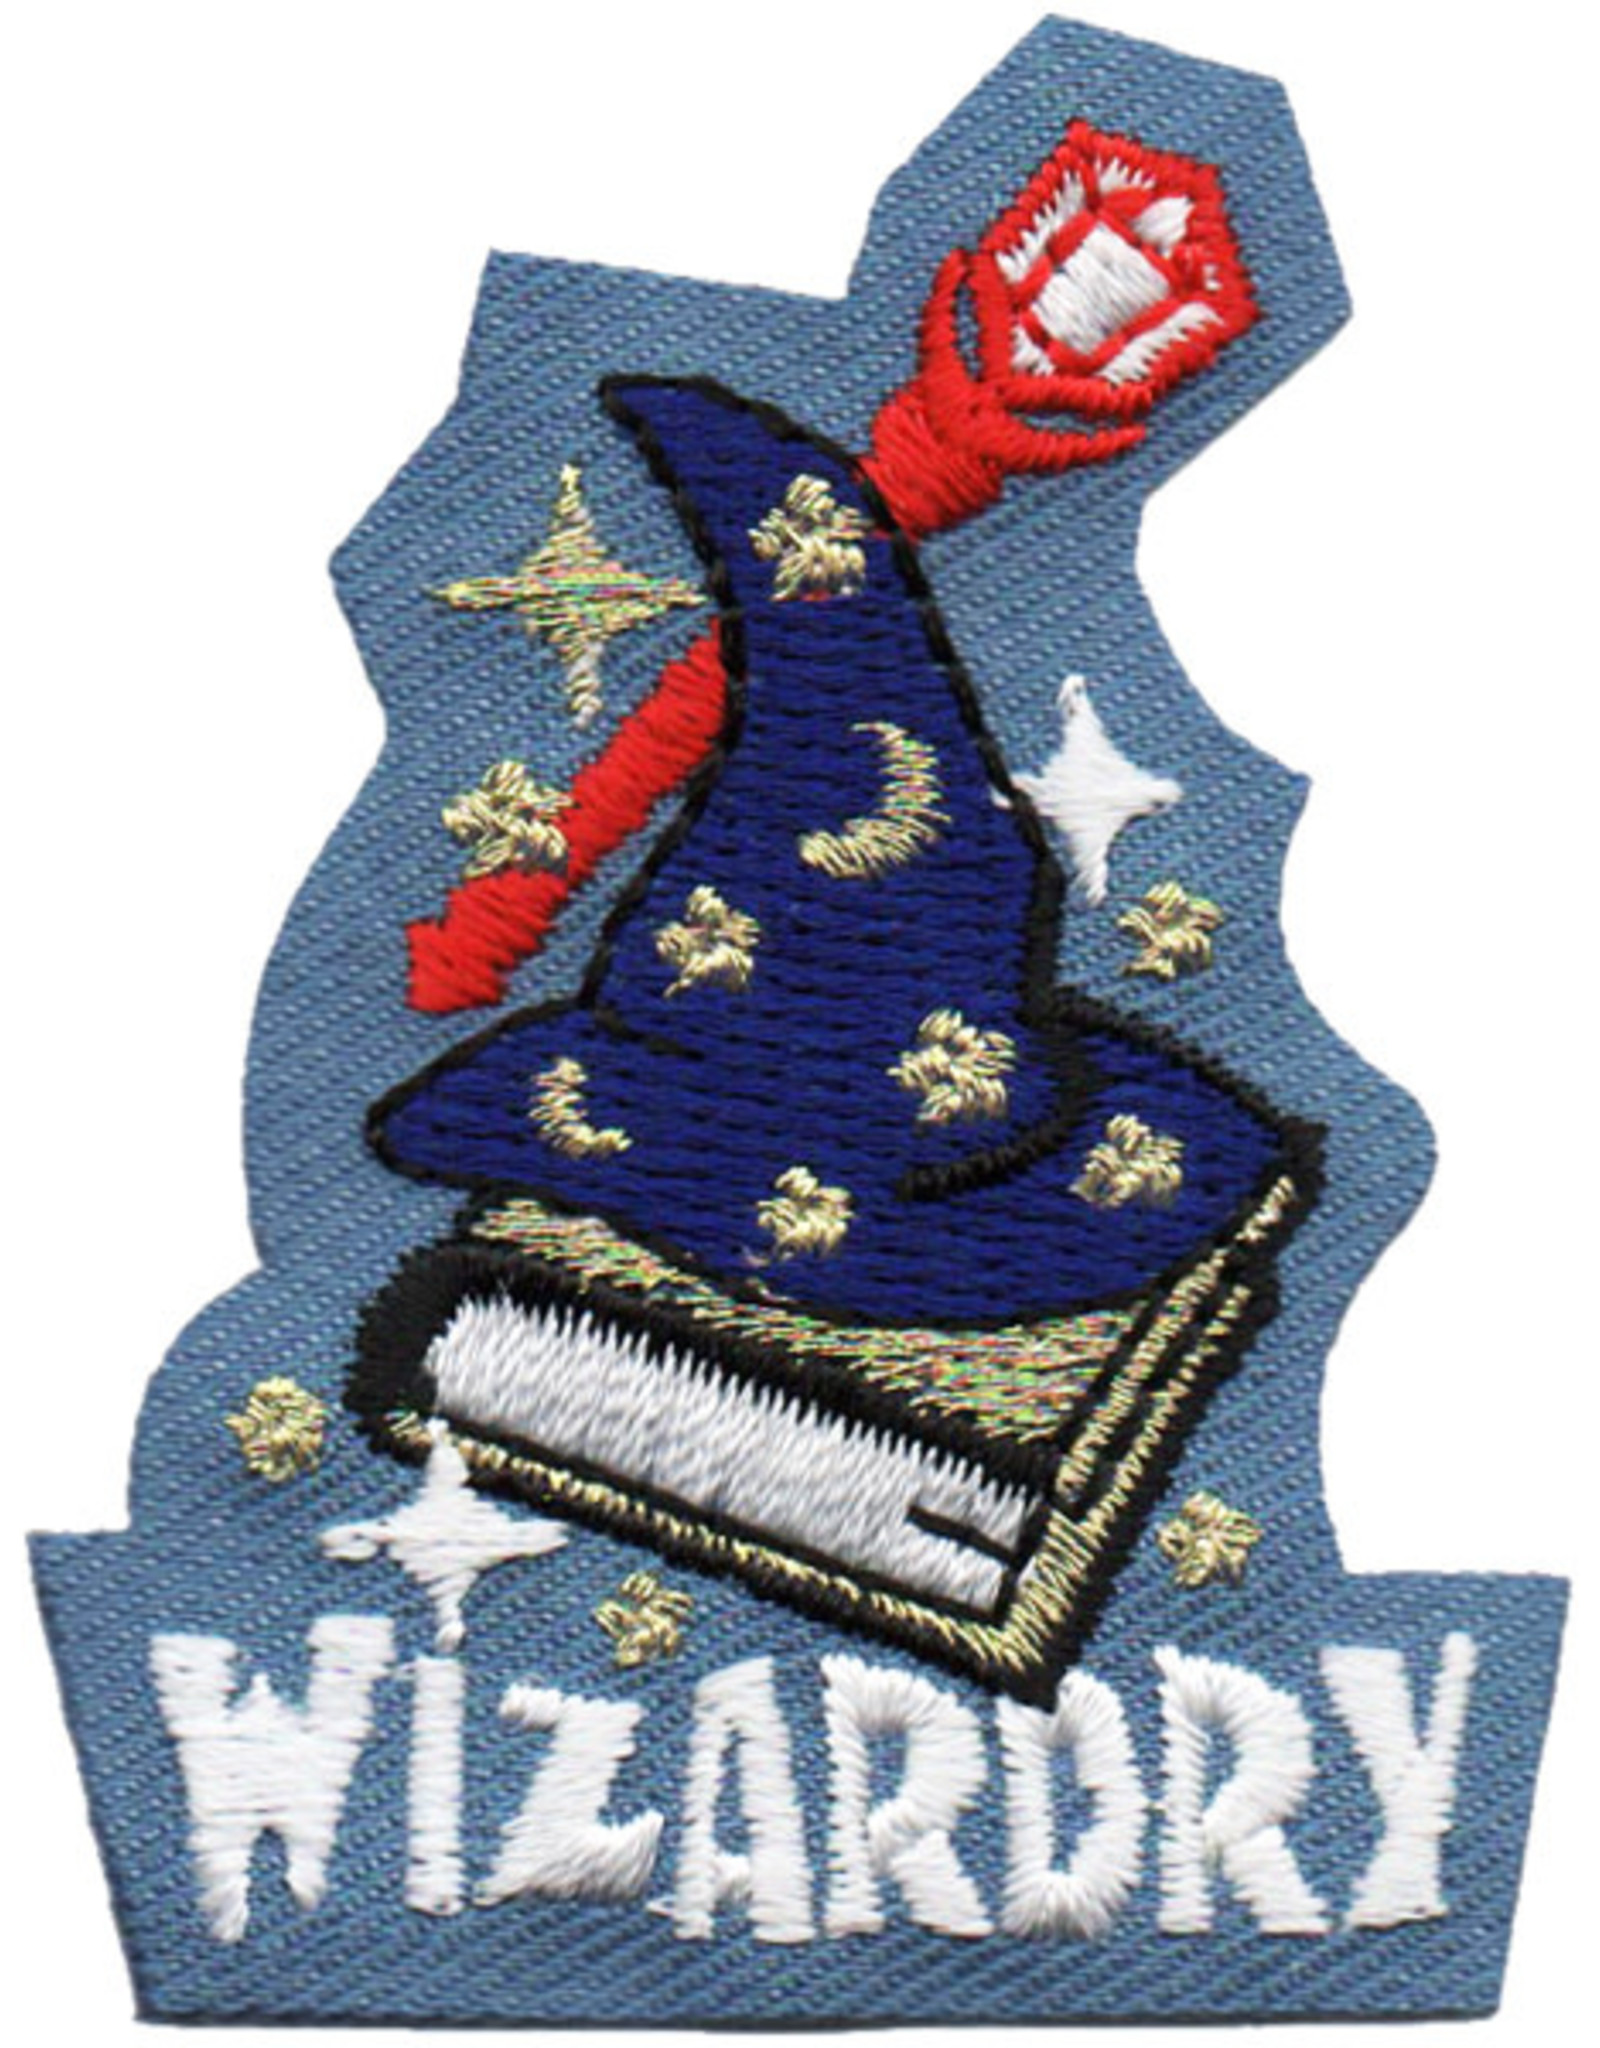 Advantage Emblem & Screen Prnt *Wizardry w/ Hat & Wand Fun Patch